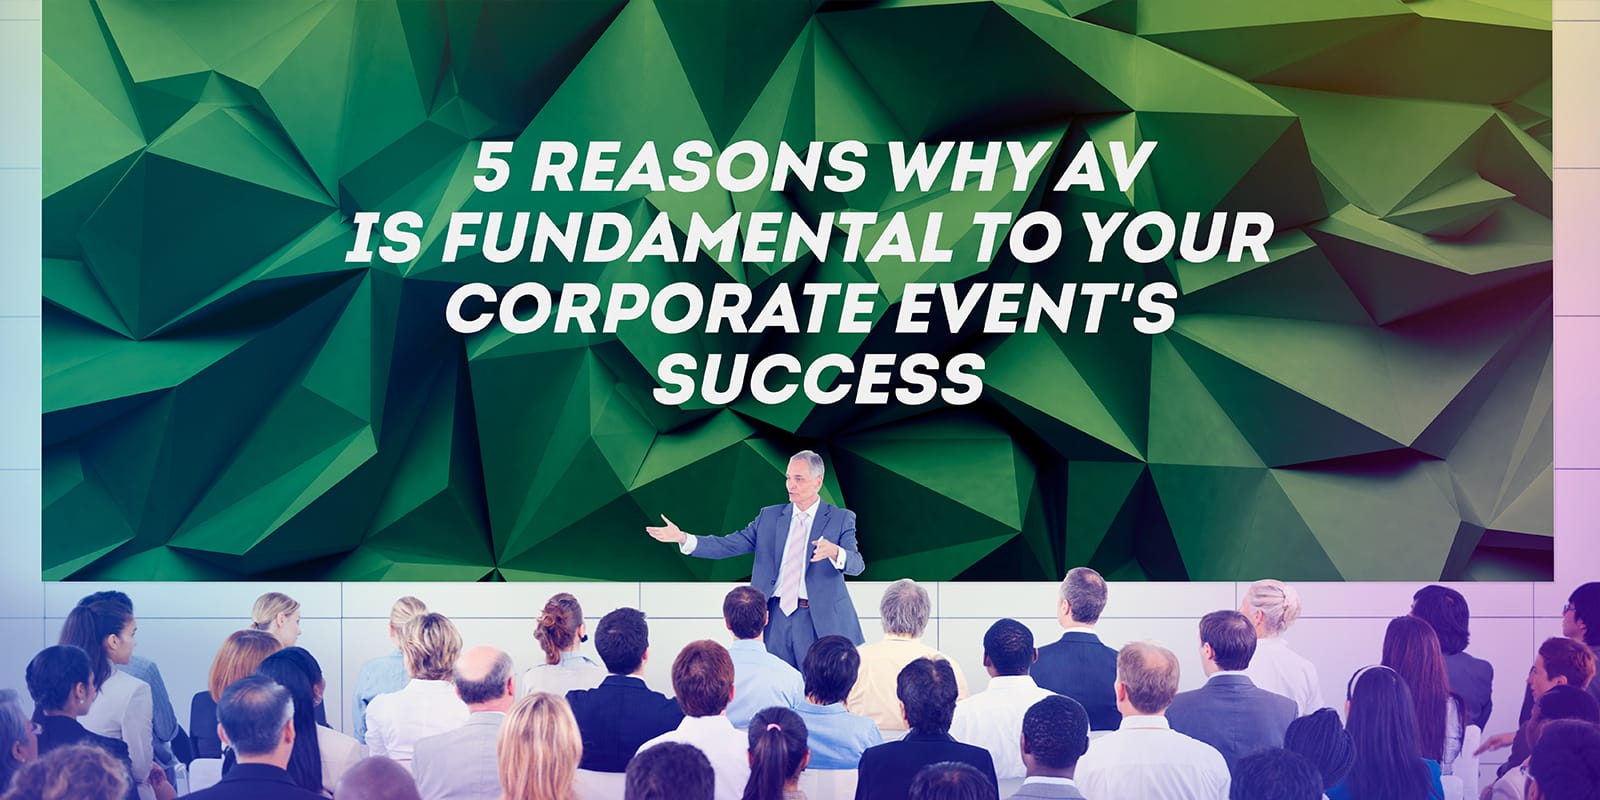 AV corporate event success